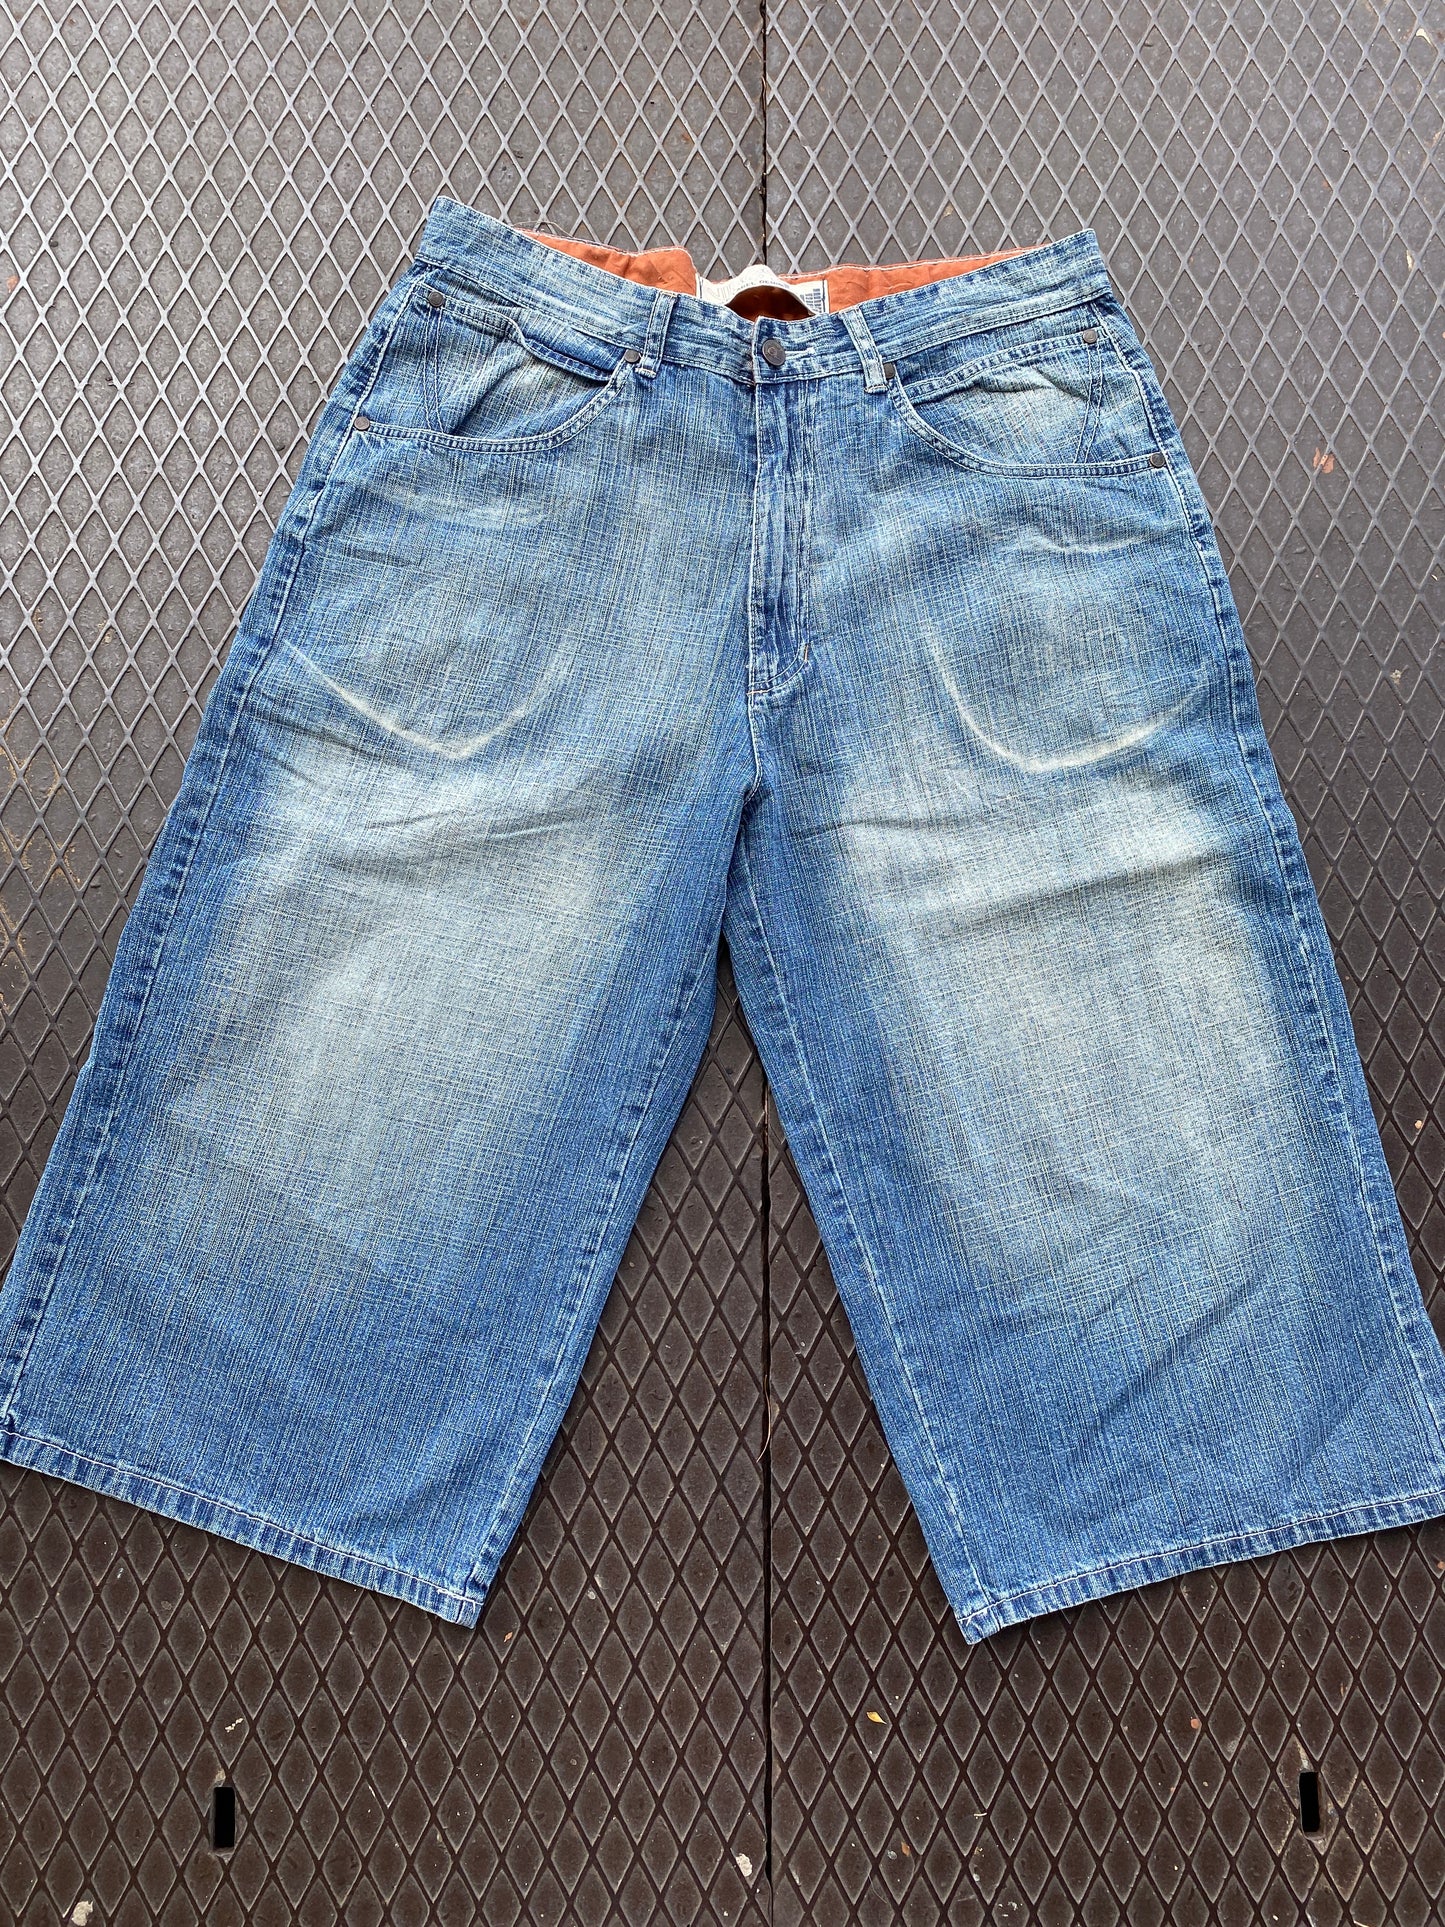 38 - Vibes GL Denim Embroidered Pockets Shorts